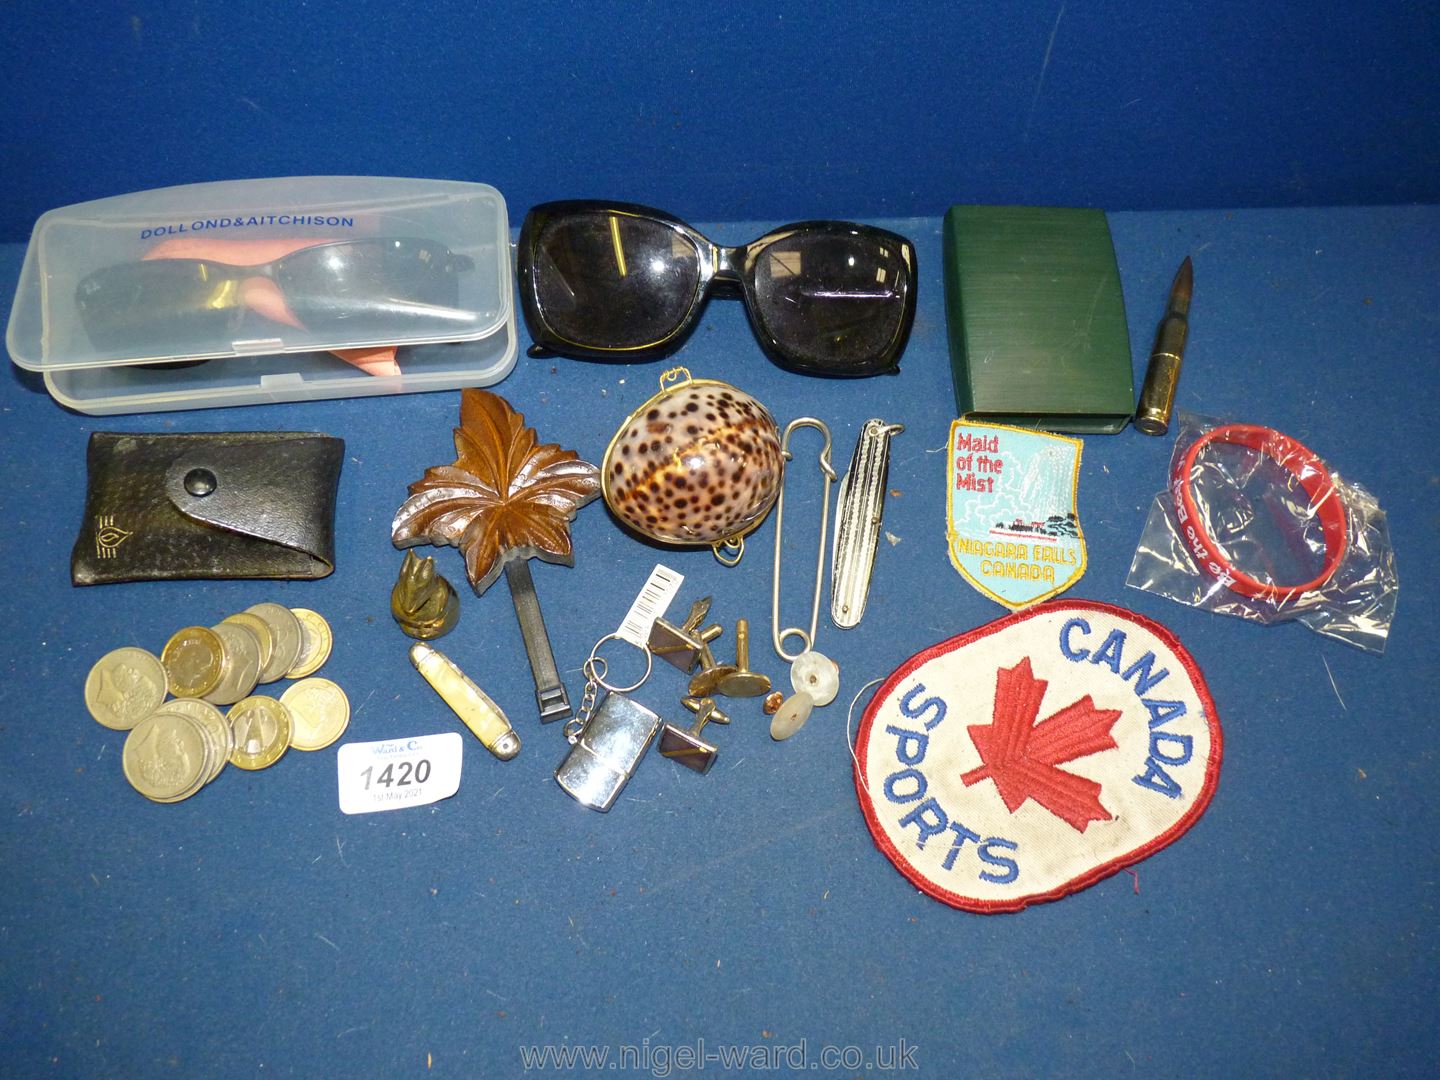 A small quantity of miscellanea including; a pair of Rayban sunglasses, souvenir bullet lighter,